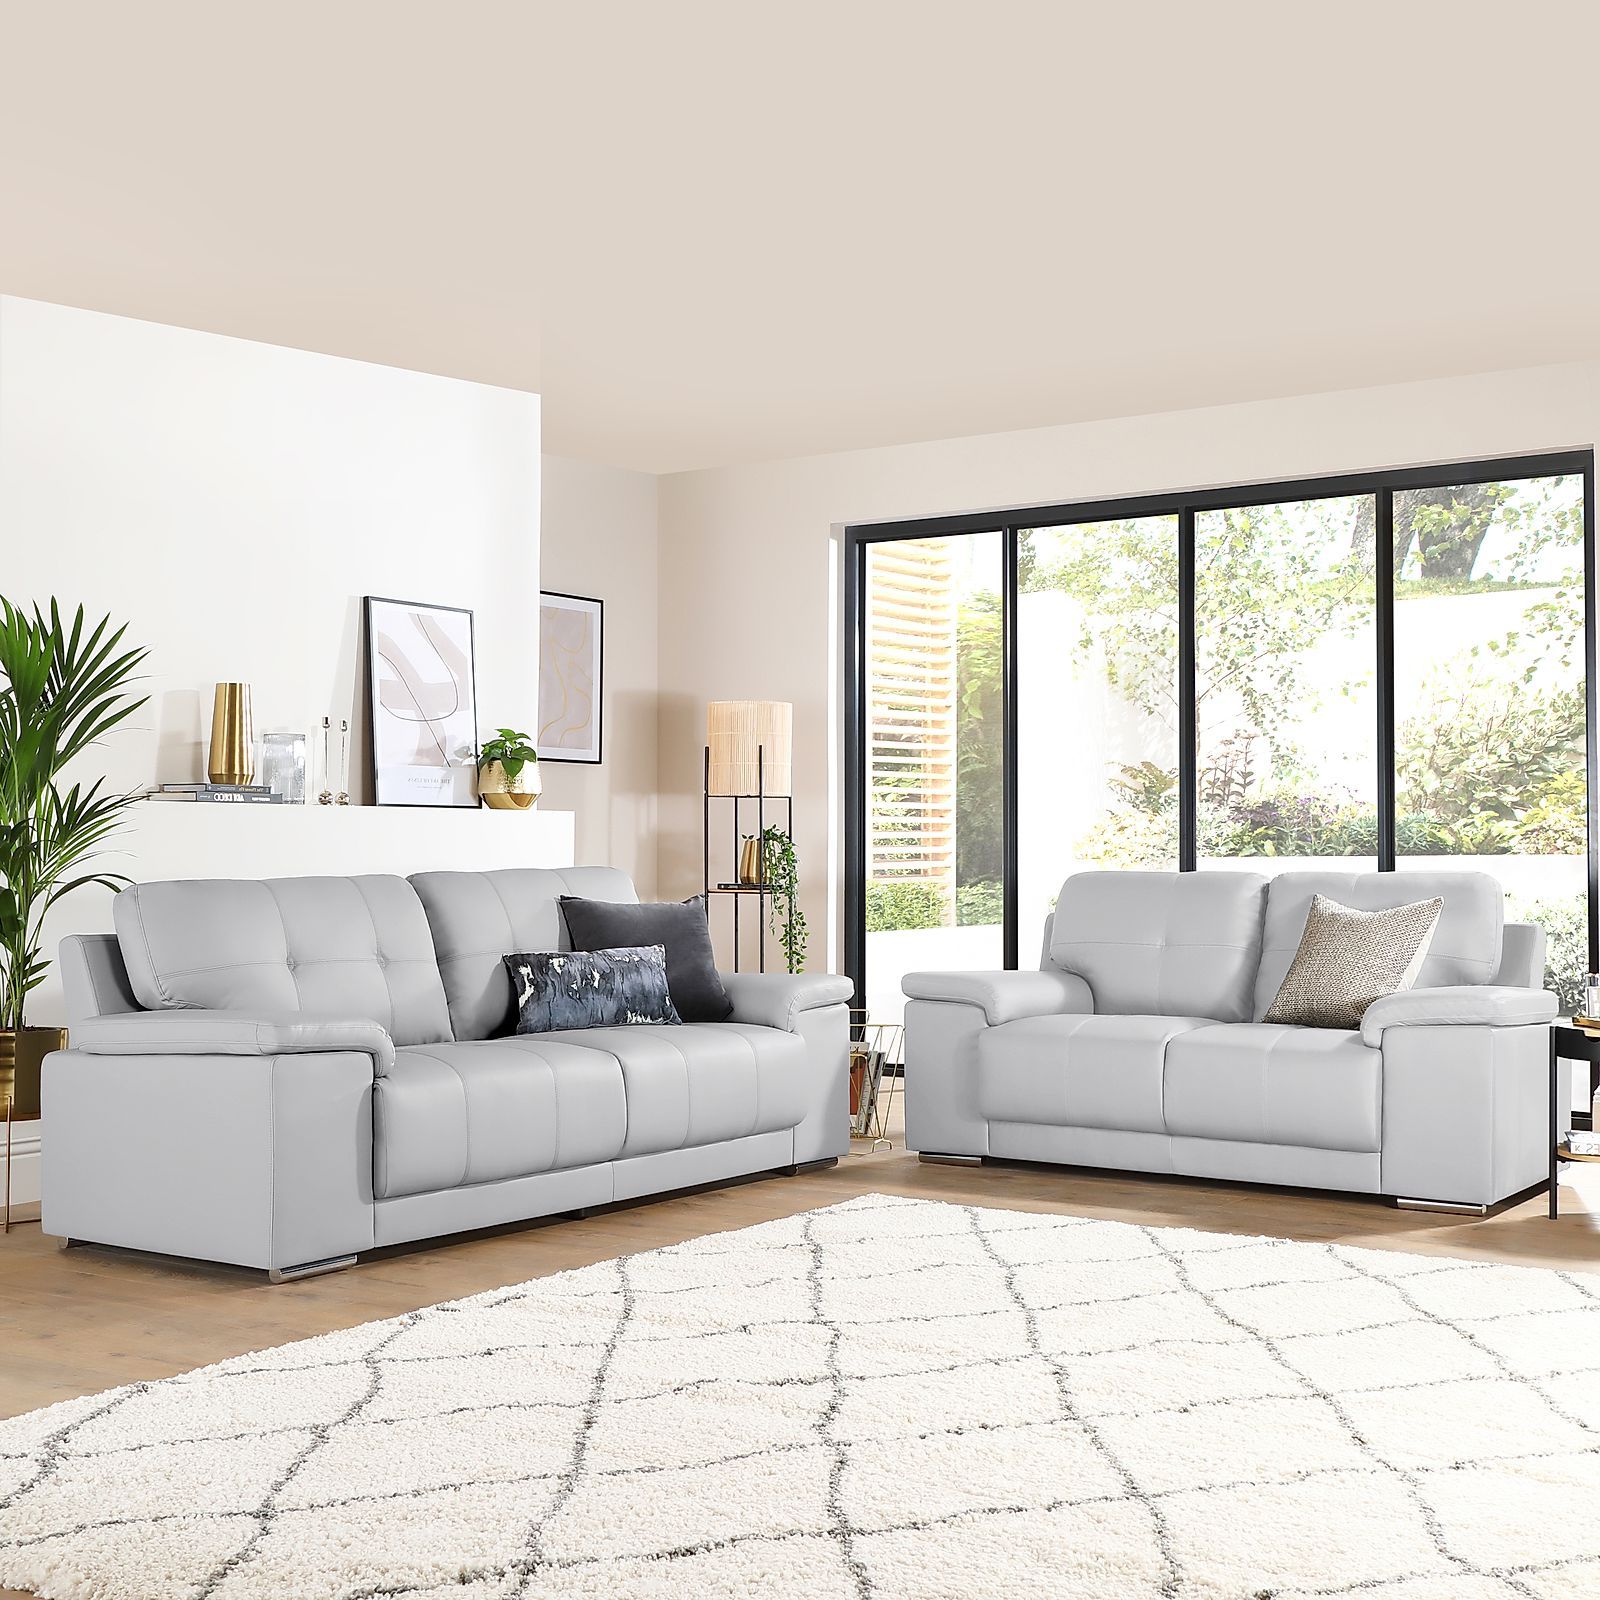 Furniture Choice Regarding Sofas In Light Grey (View 7 of 15)